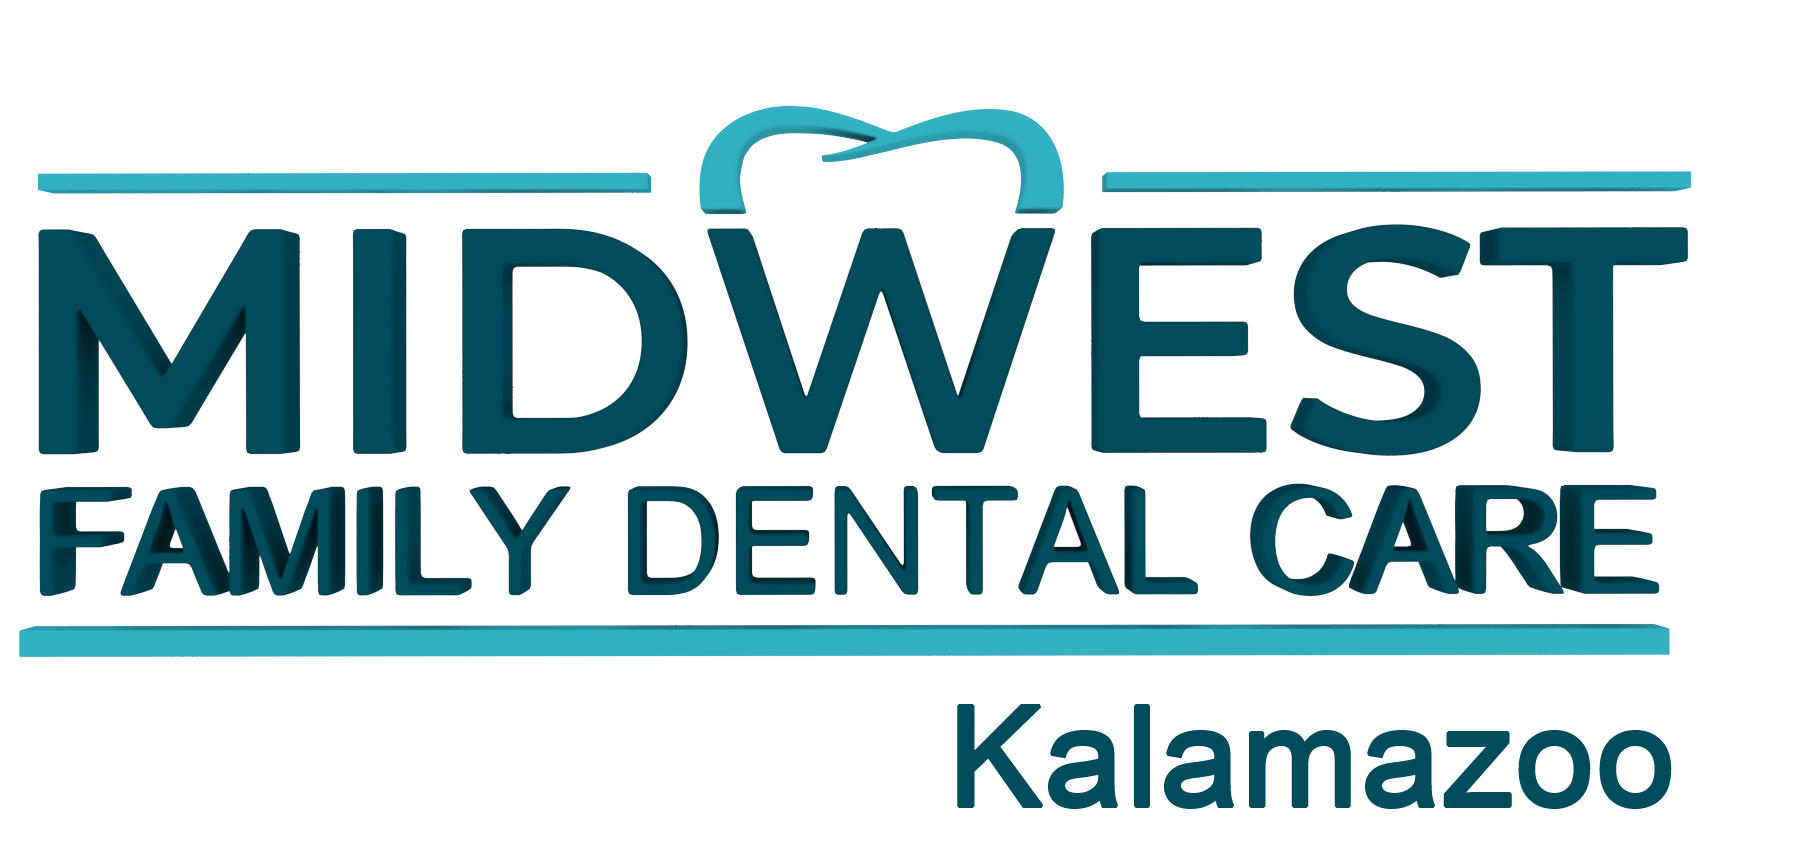 Kalamazoo Logo - Midwest Family Dental Care: Dentist in Kalamazoo, MI